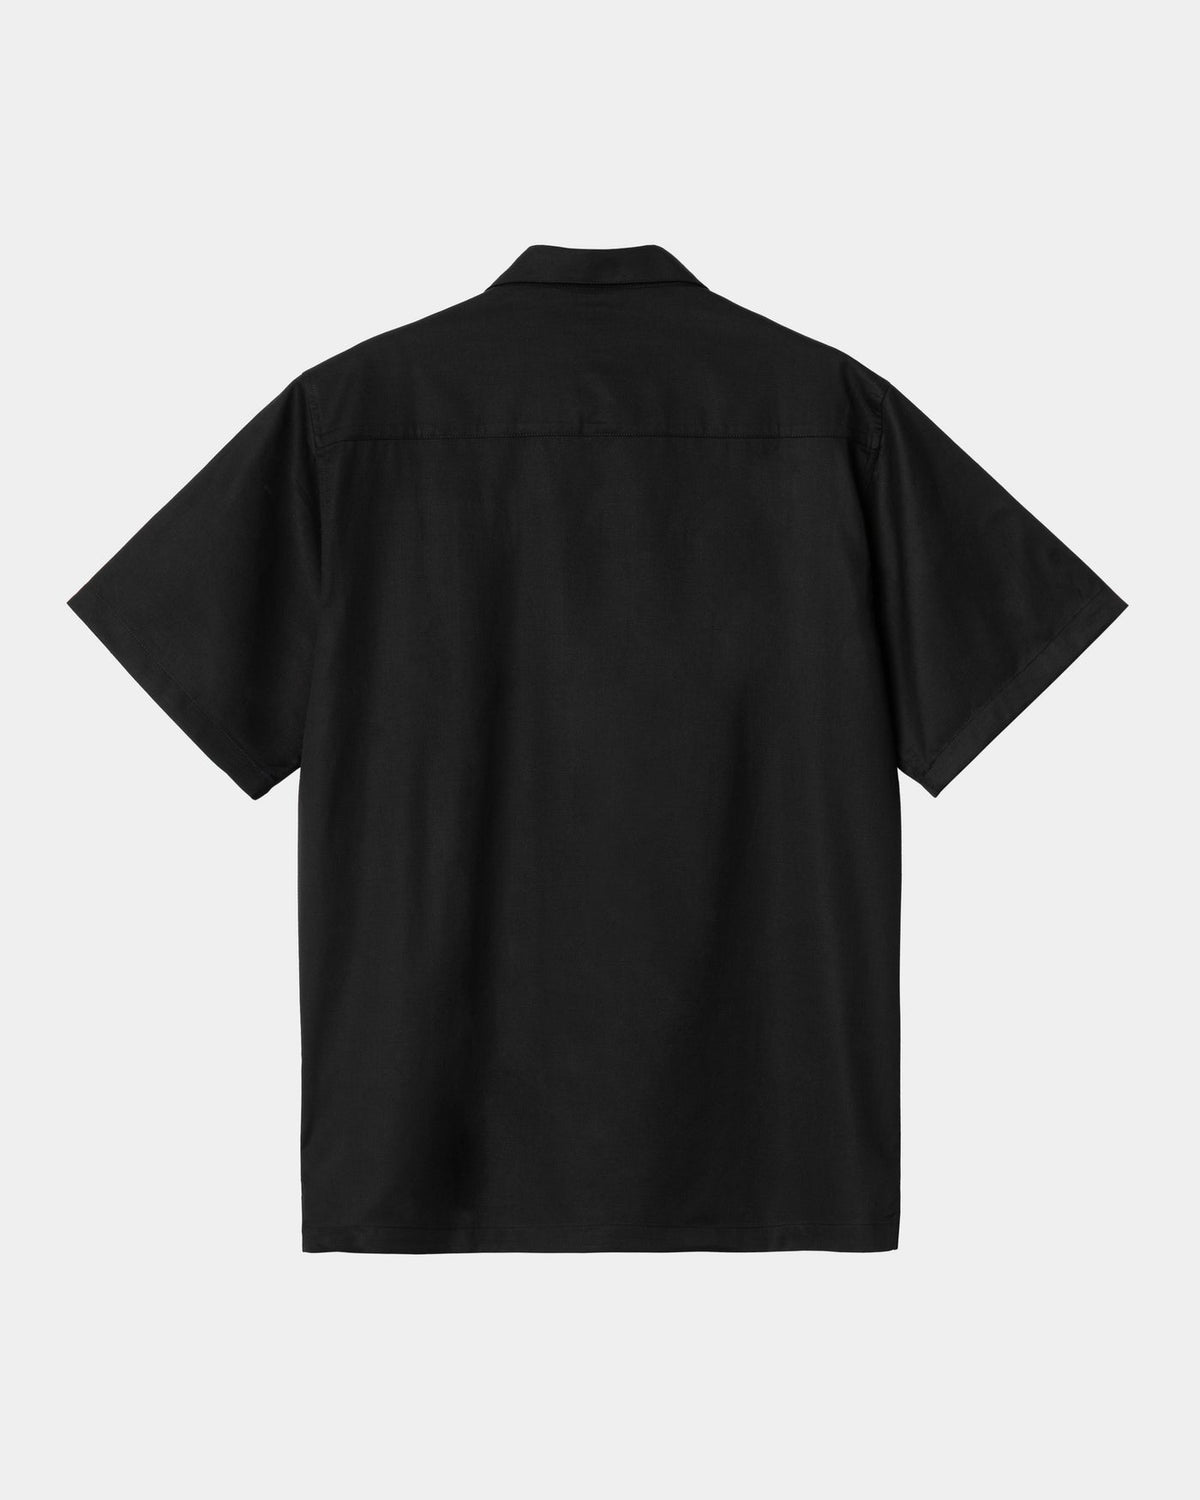 Delray Shirt in Black